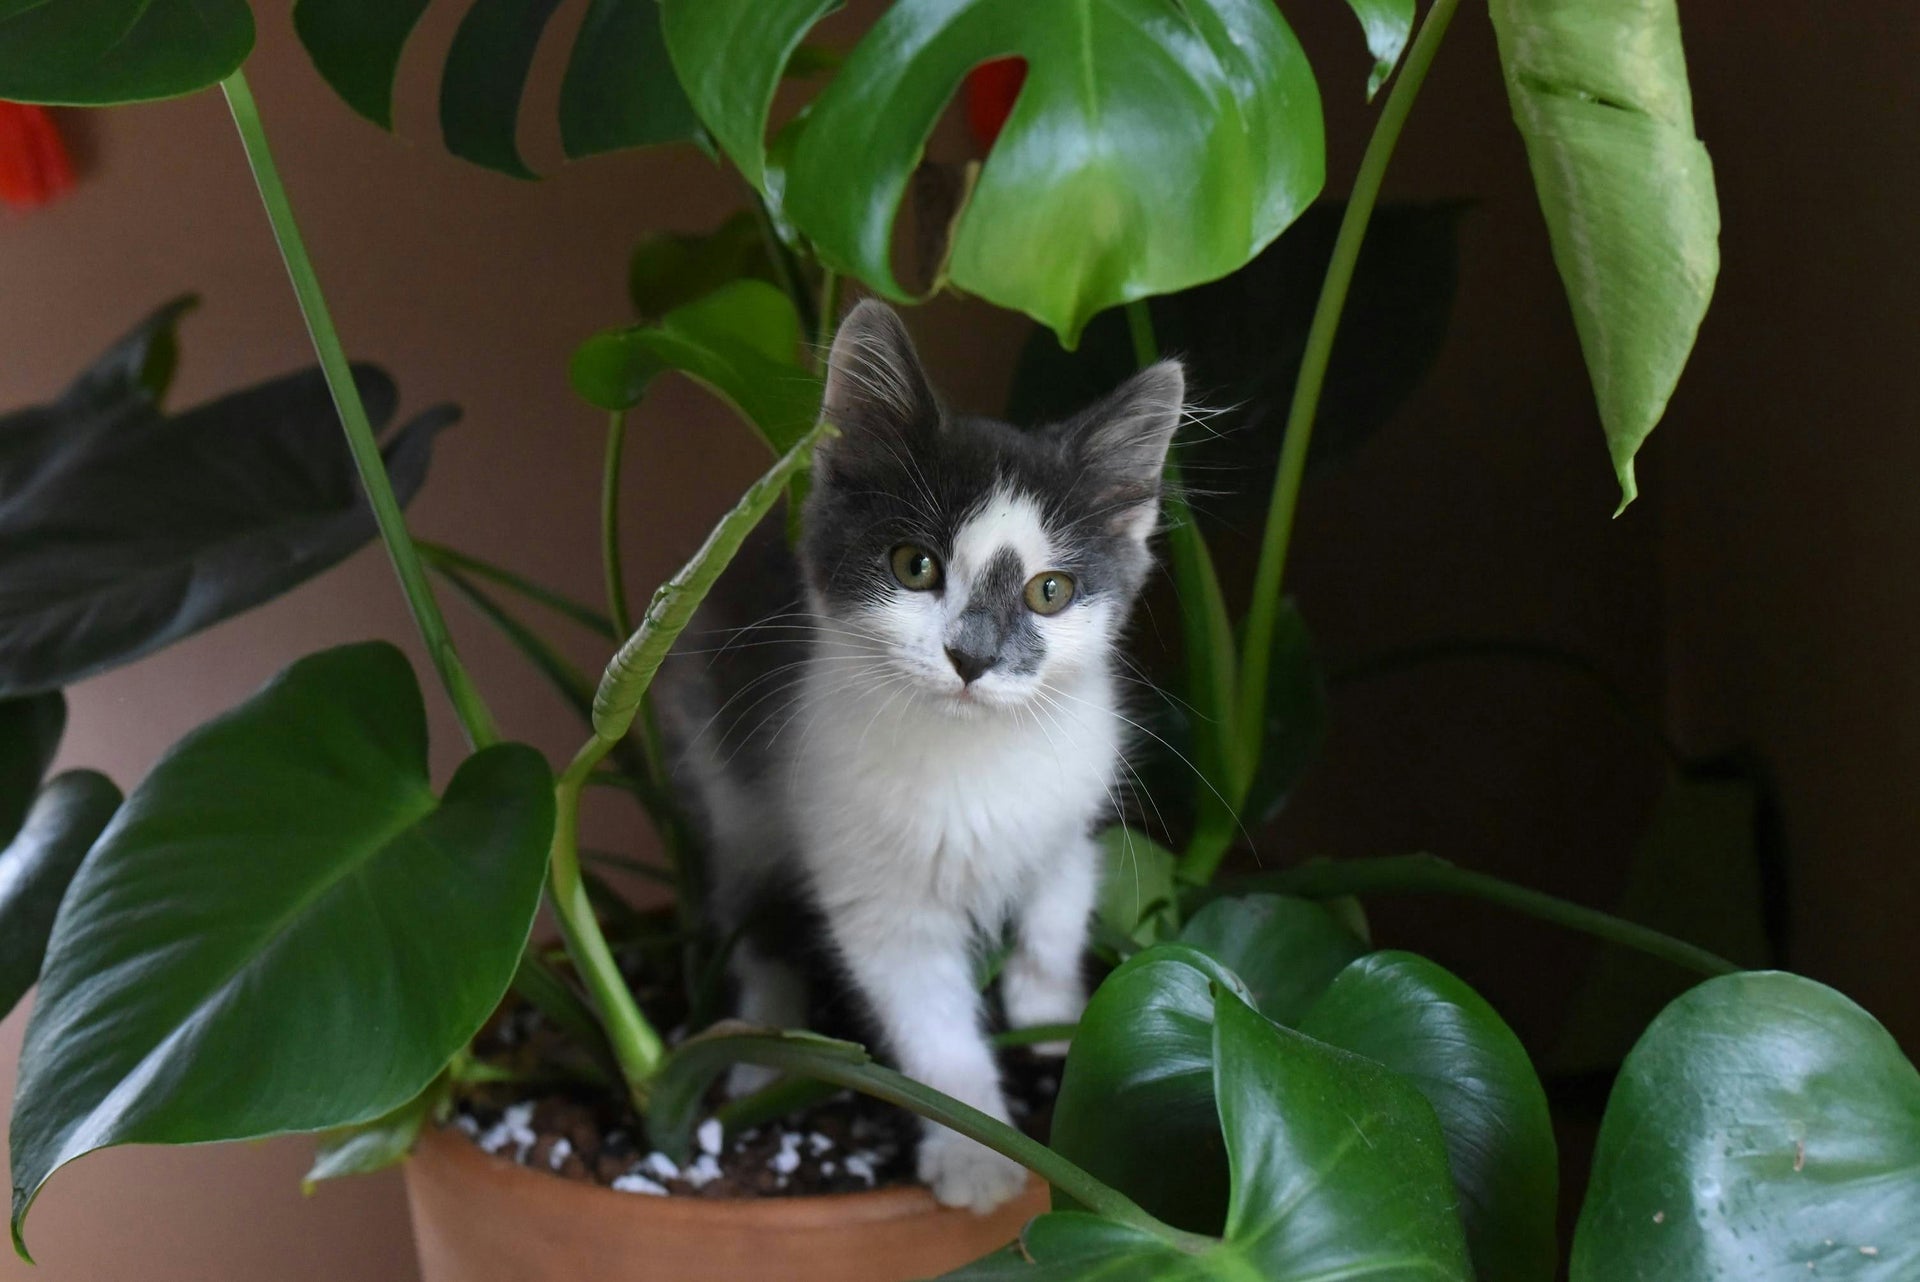 Cat Safe Houseplants